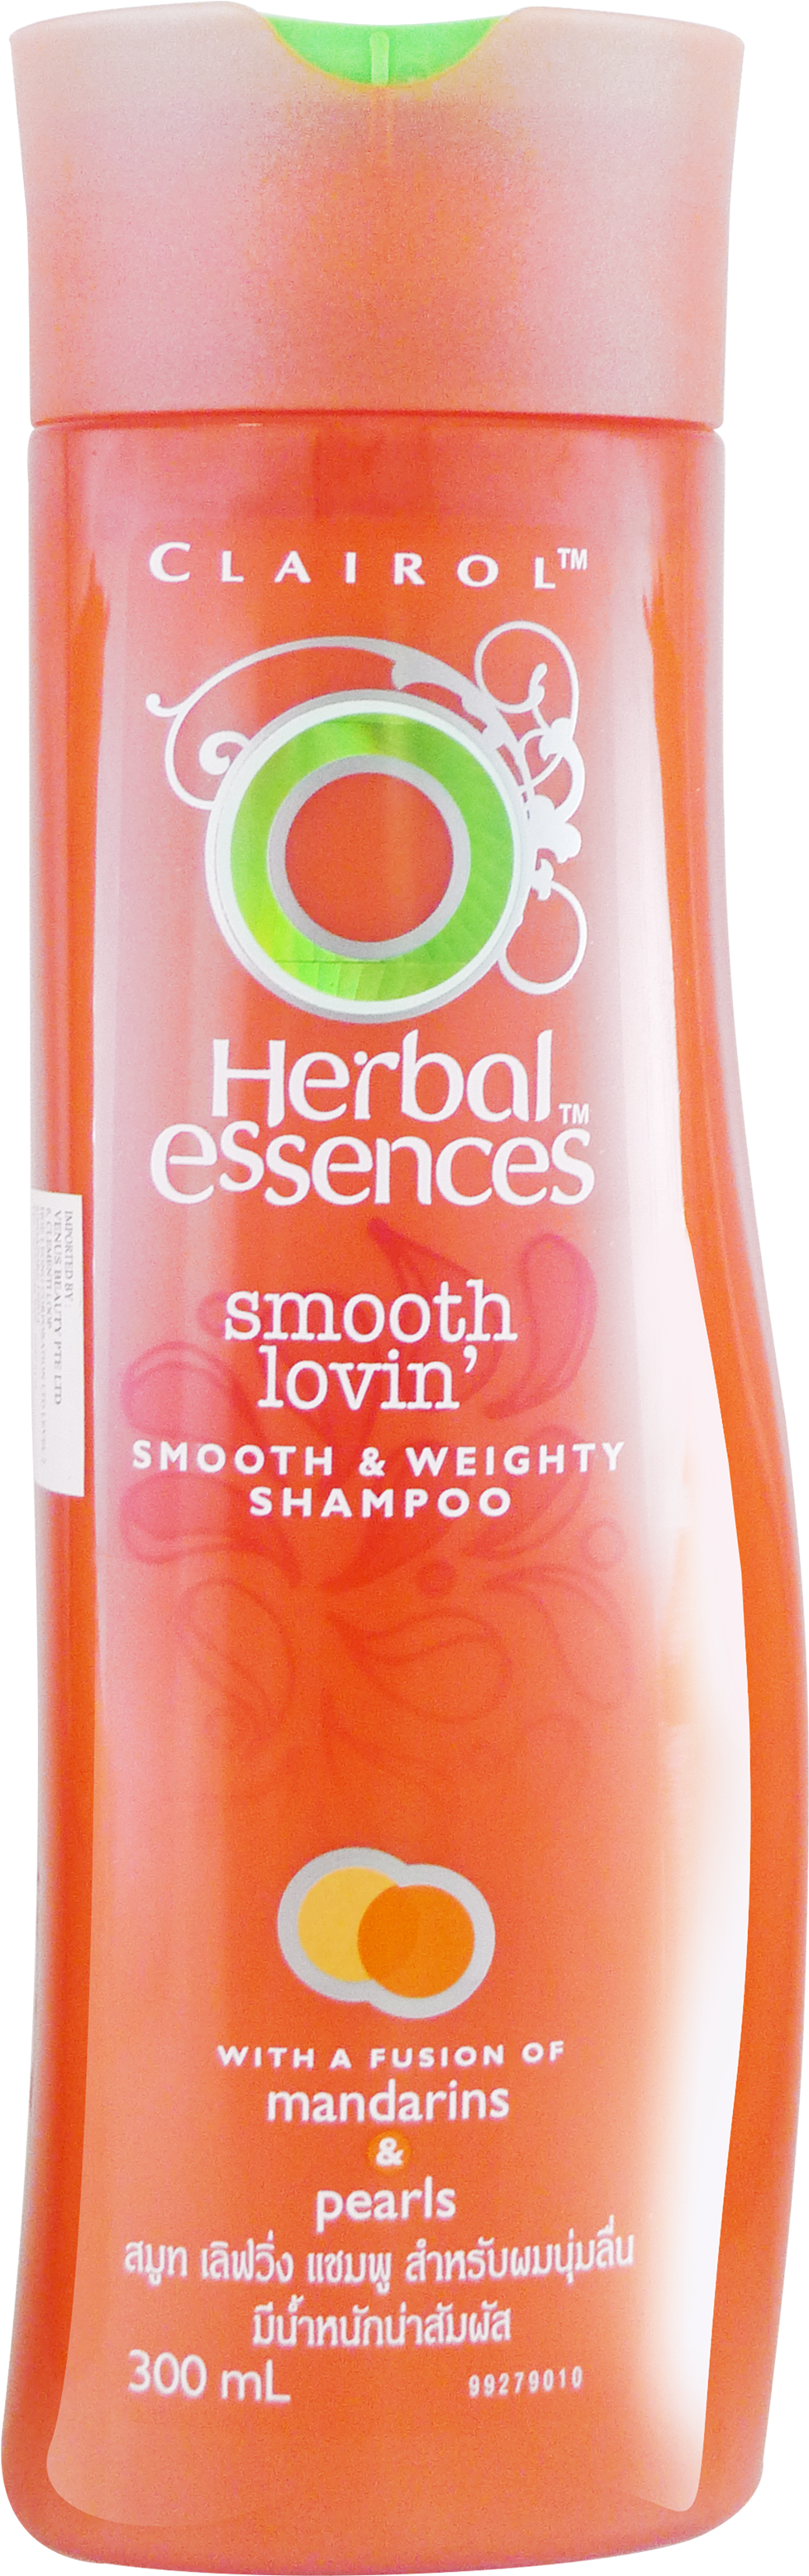 Clairol Herbal Essences Shampoo 300ml Smooth Lovin' - Herbal Essences Shampoo Png (3685x3685)